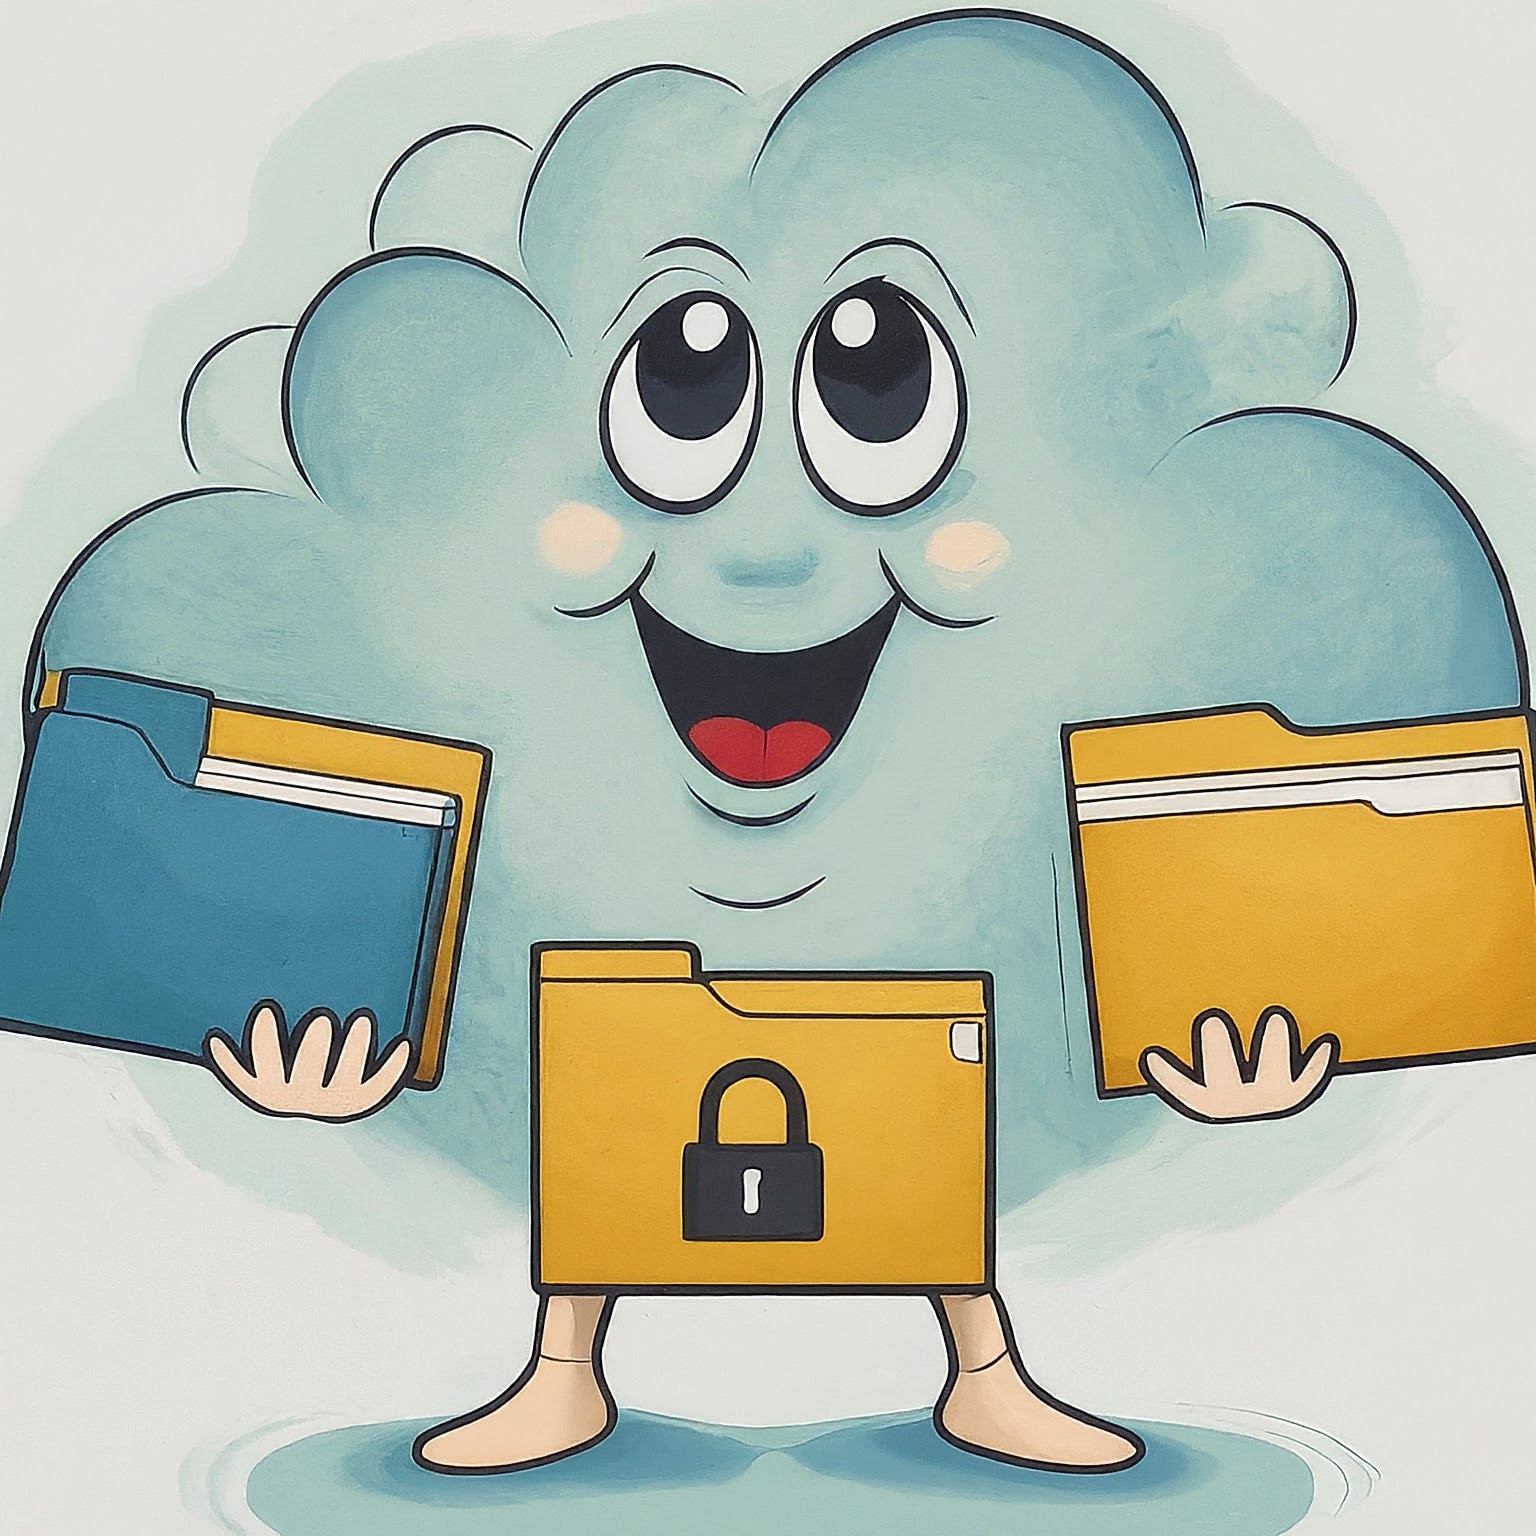 An cartoon image of cloud holding computer files